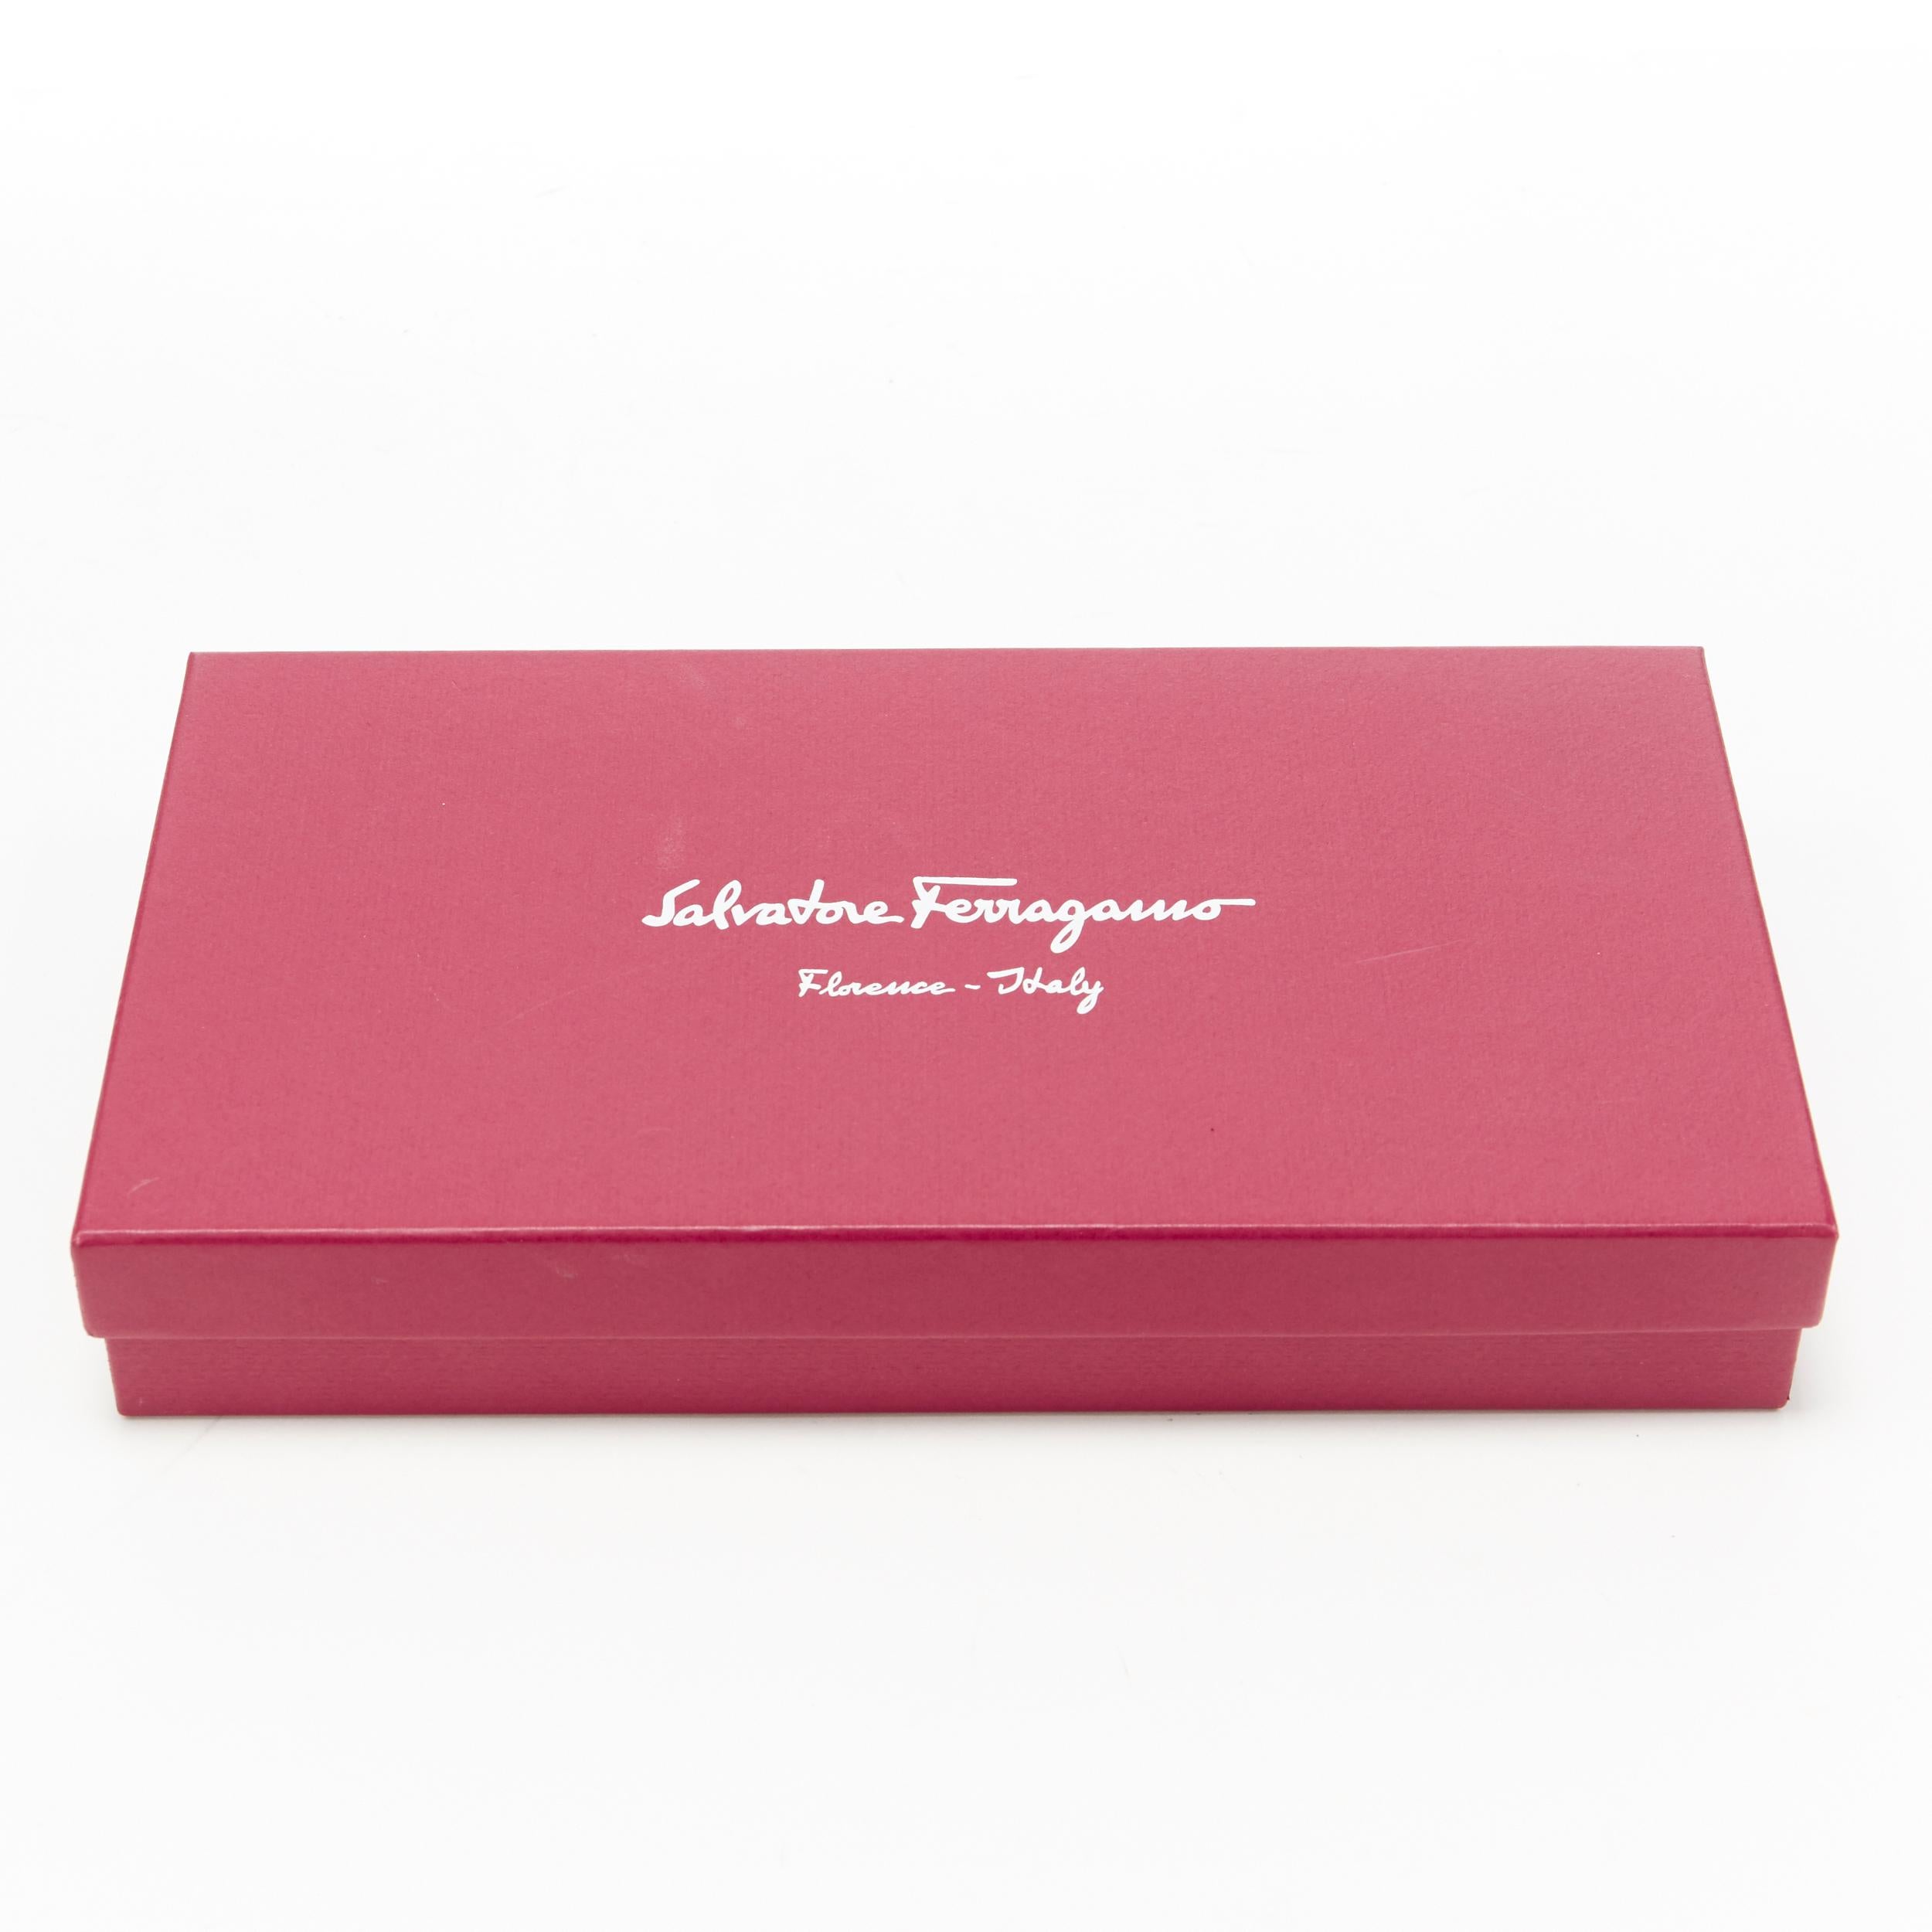 Women's new SALVATORE FERRAGAMO blush pink gold logo top zip wristlet pouch clutch bag